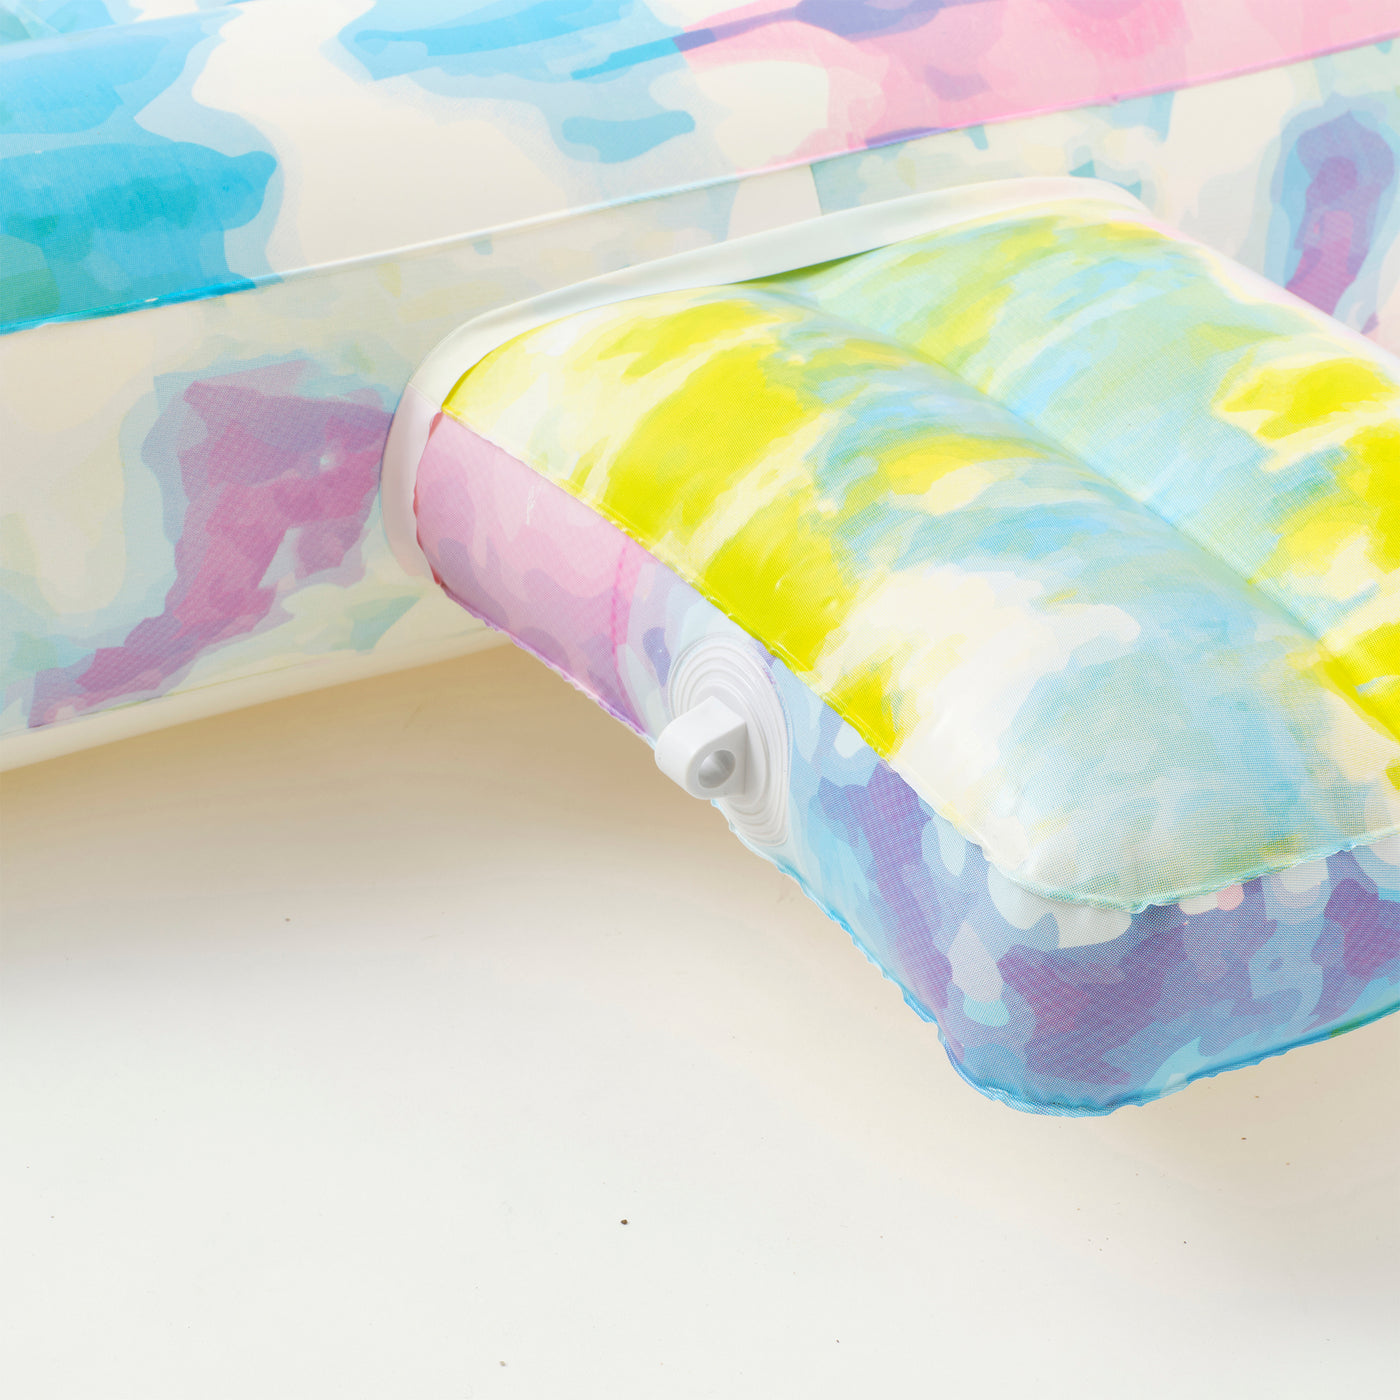 Sunny Life Luxe Lie-On Float Ice Pop Tie Dye